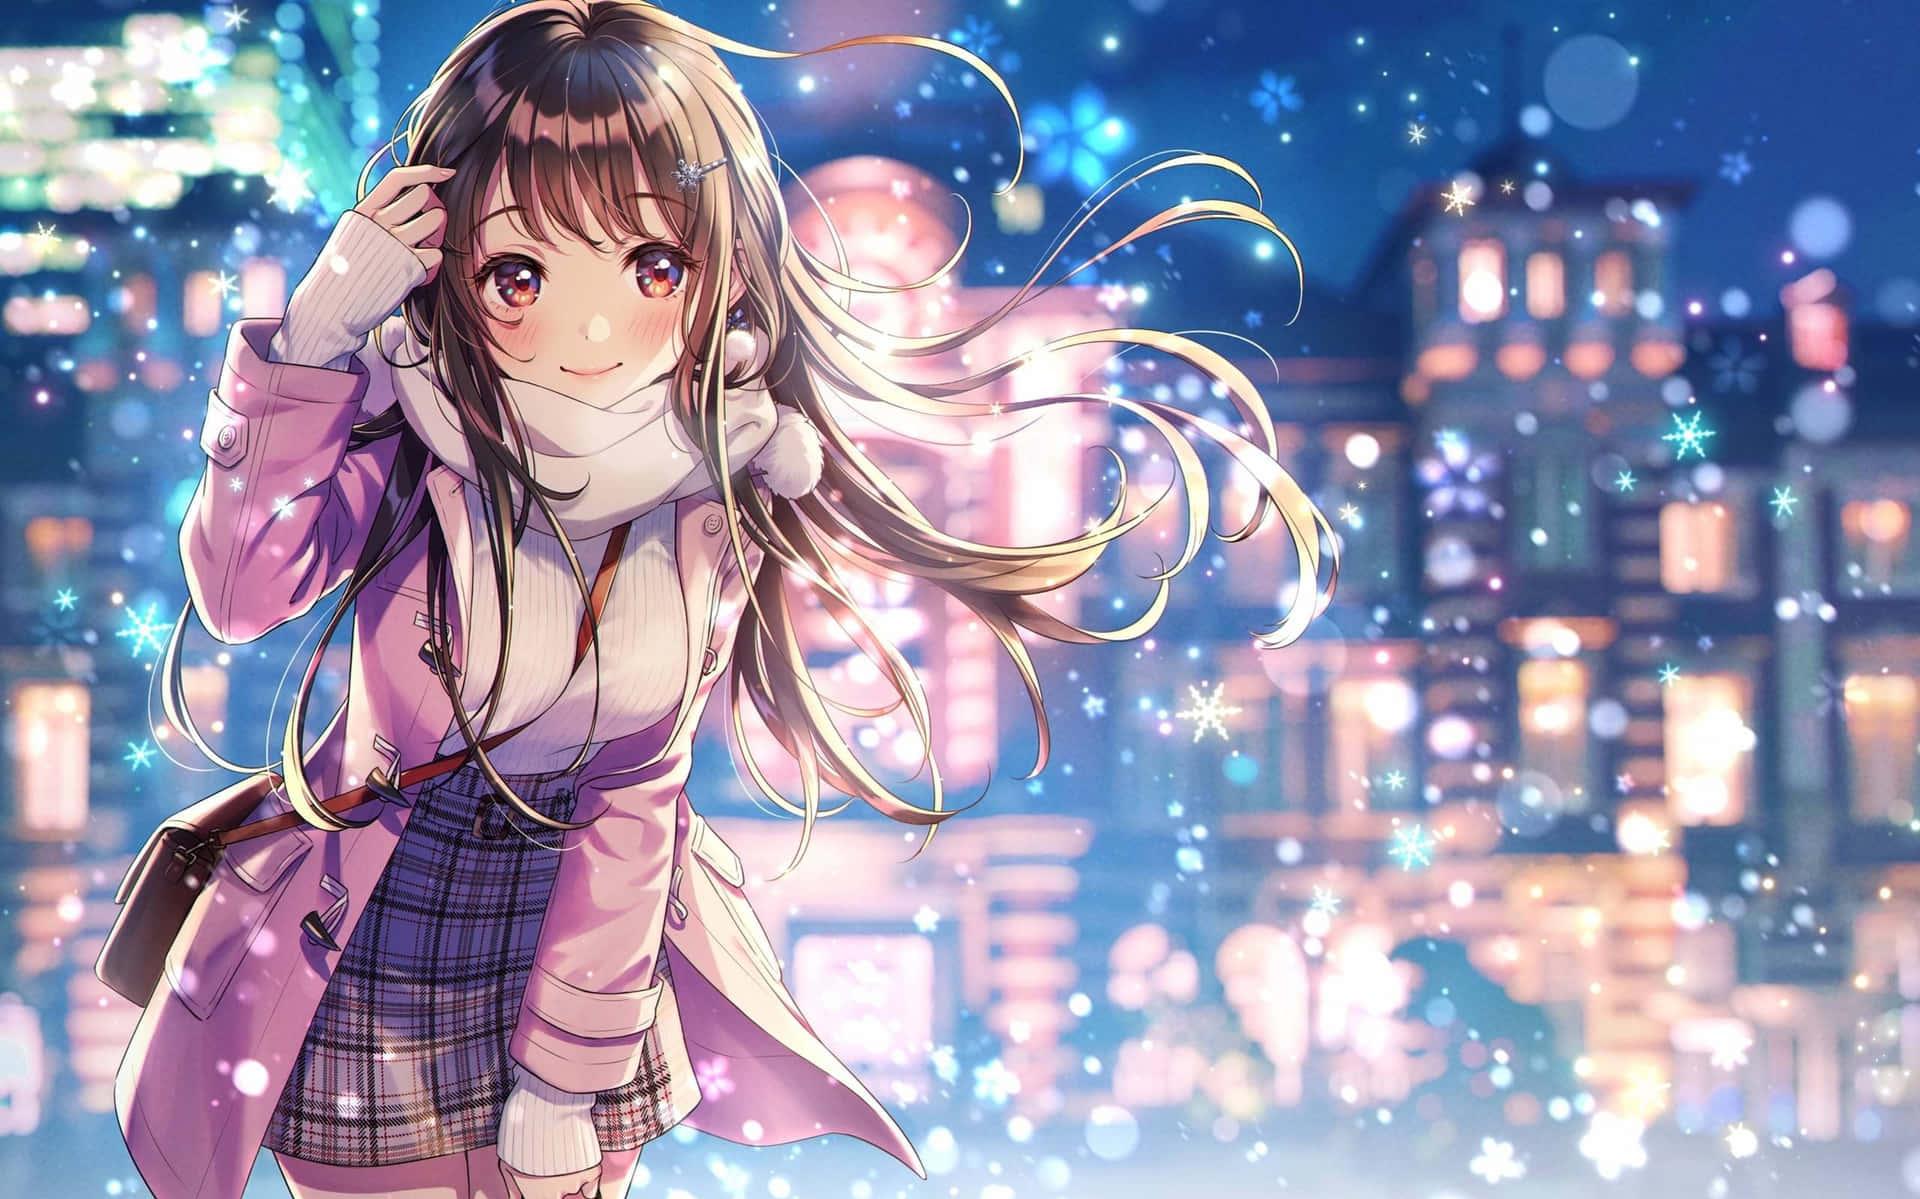  Anime Girl Backgrounds